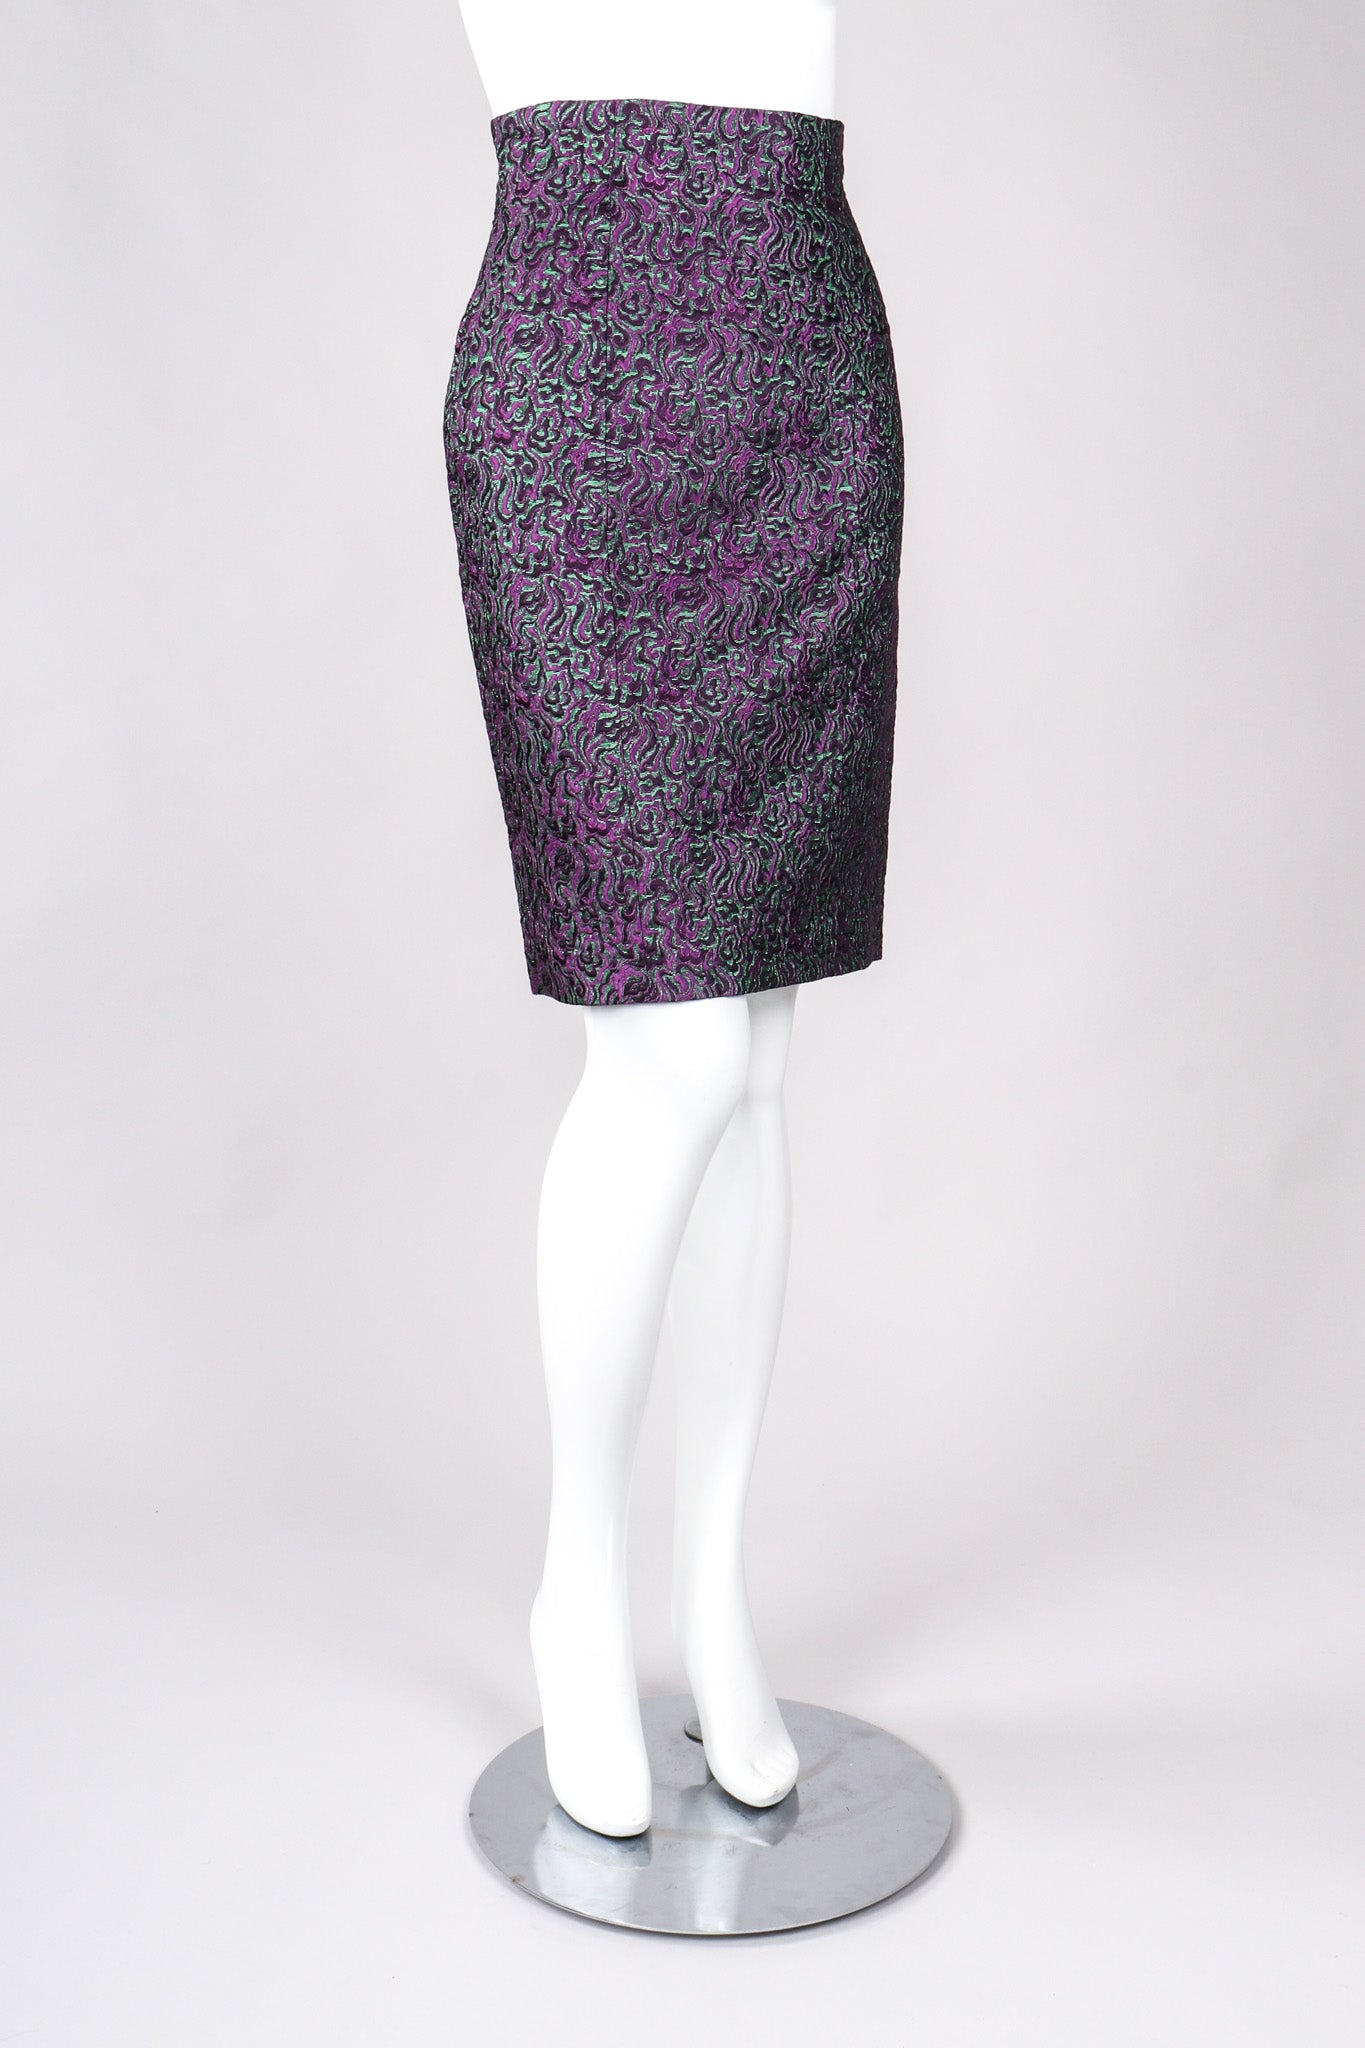 Recess Los Angeles Vintage Lilian Fell Metallic Lamé Paisley Peplum Jacket & Skirt Set